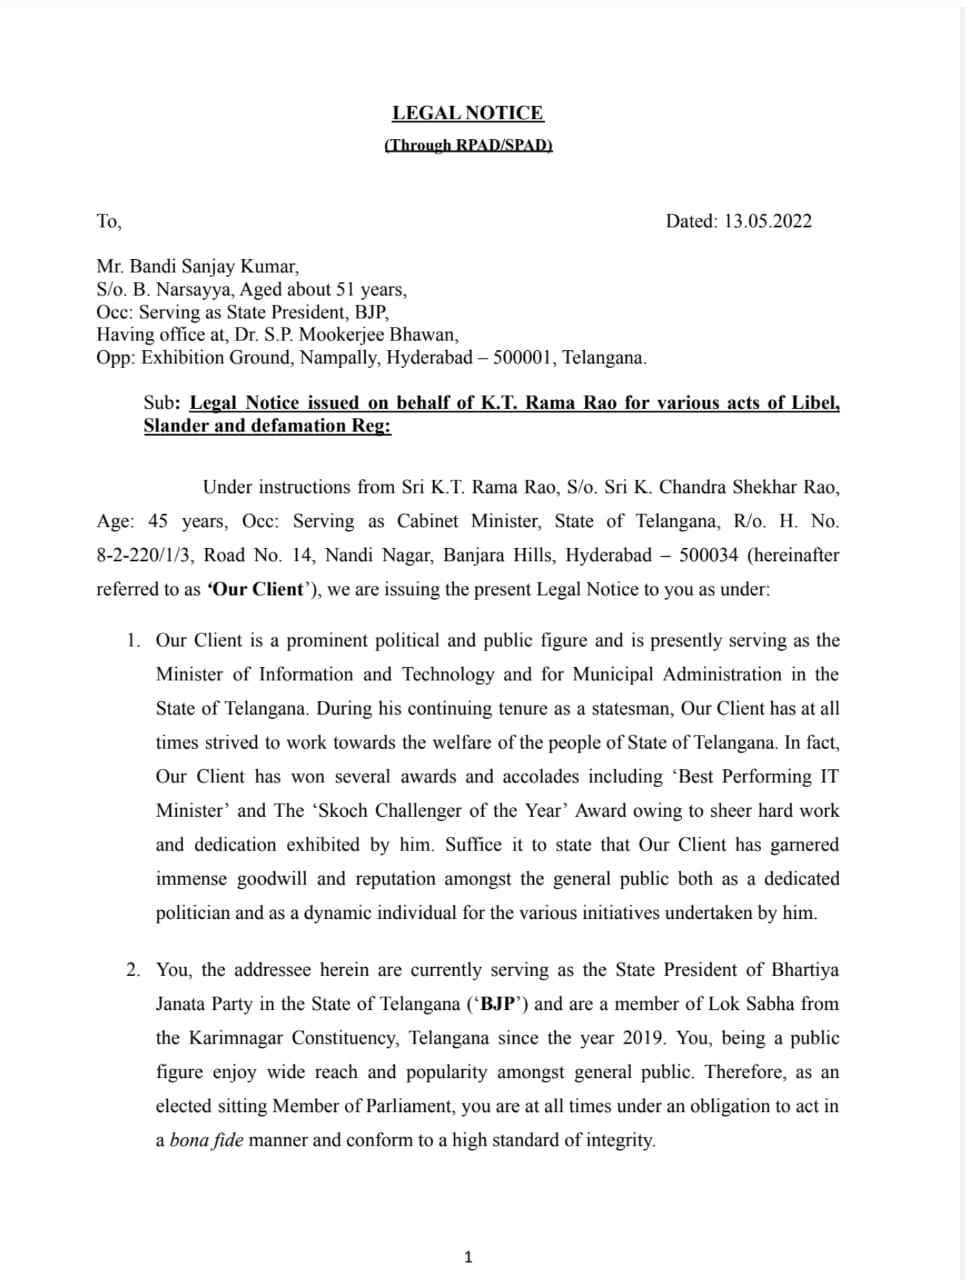 KTR files defamation suit against Bandi Sanjay